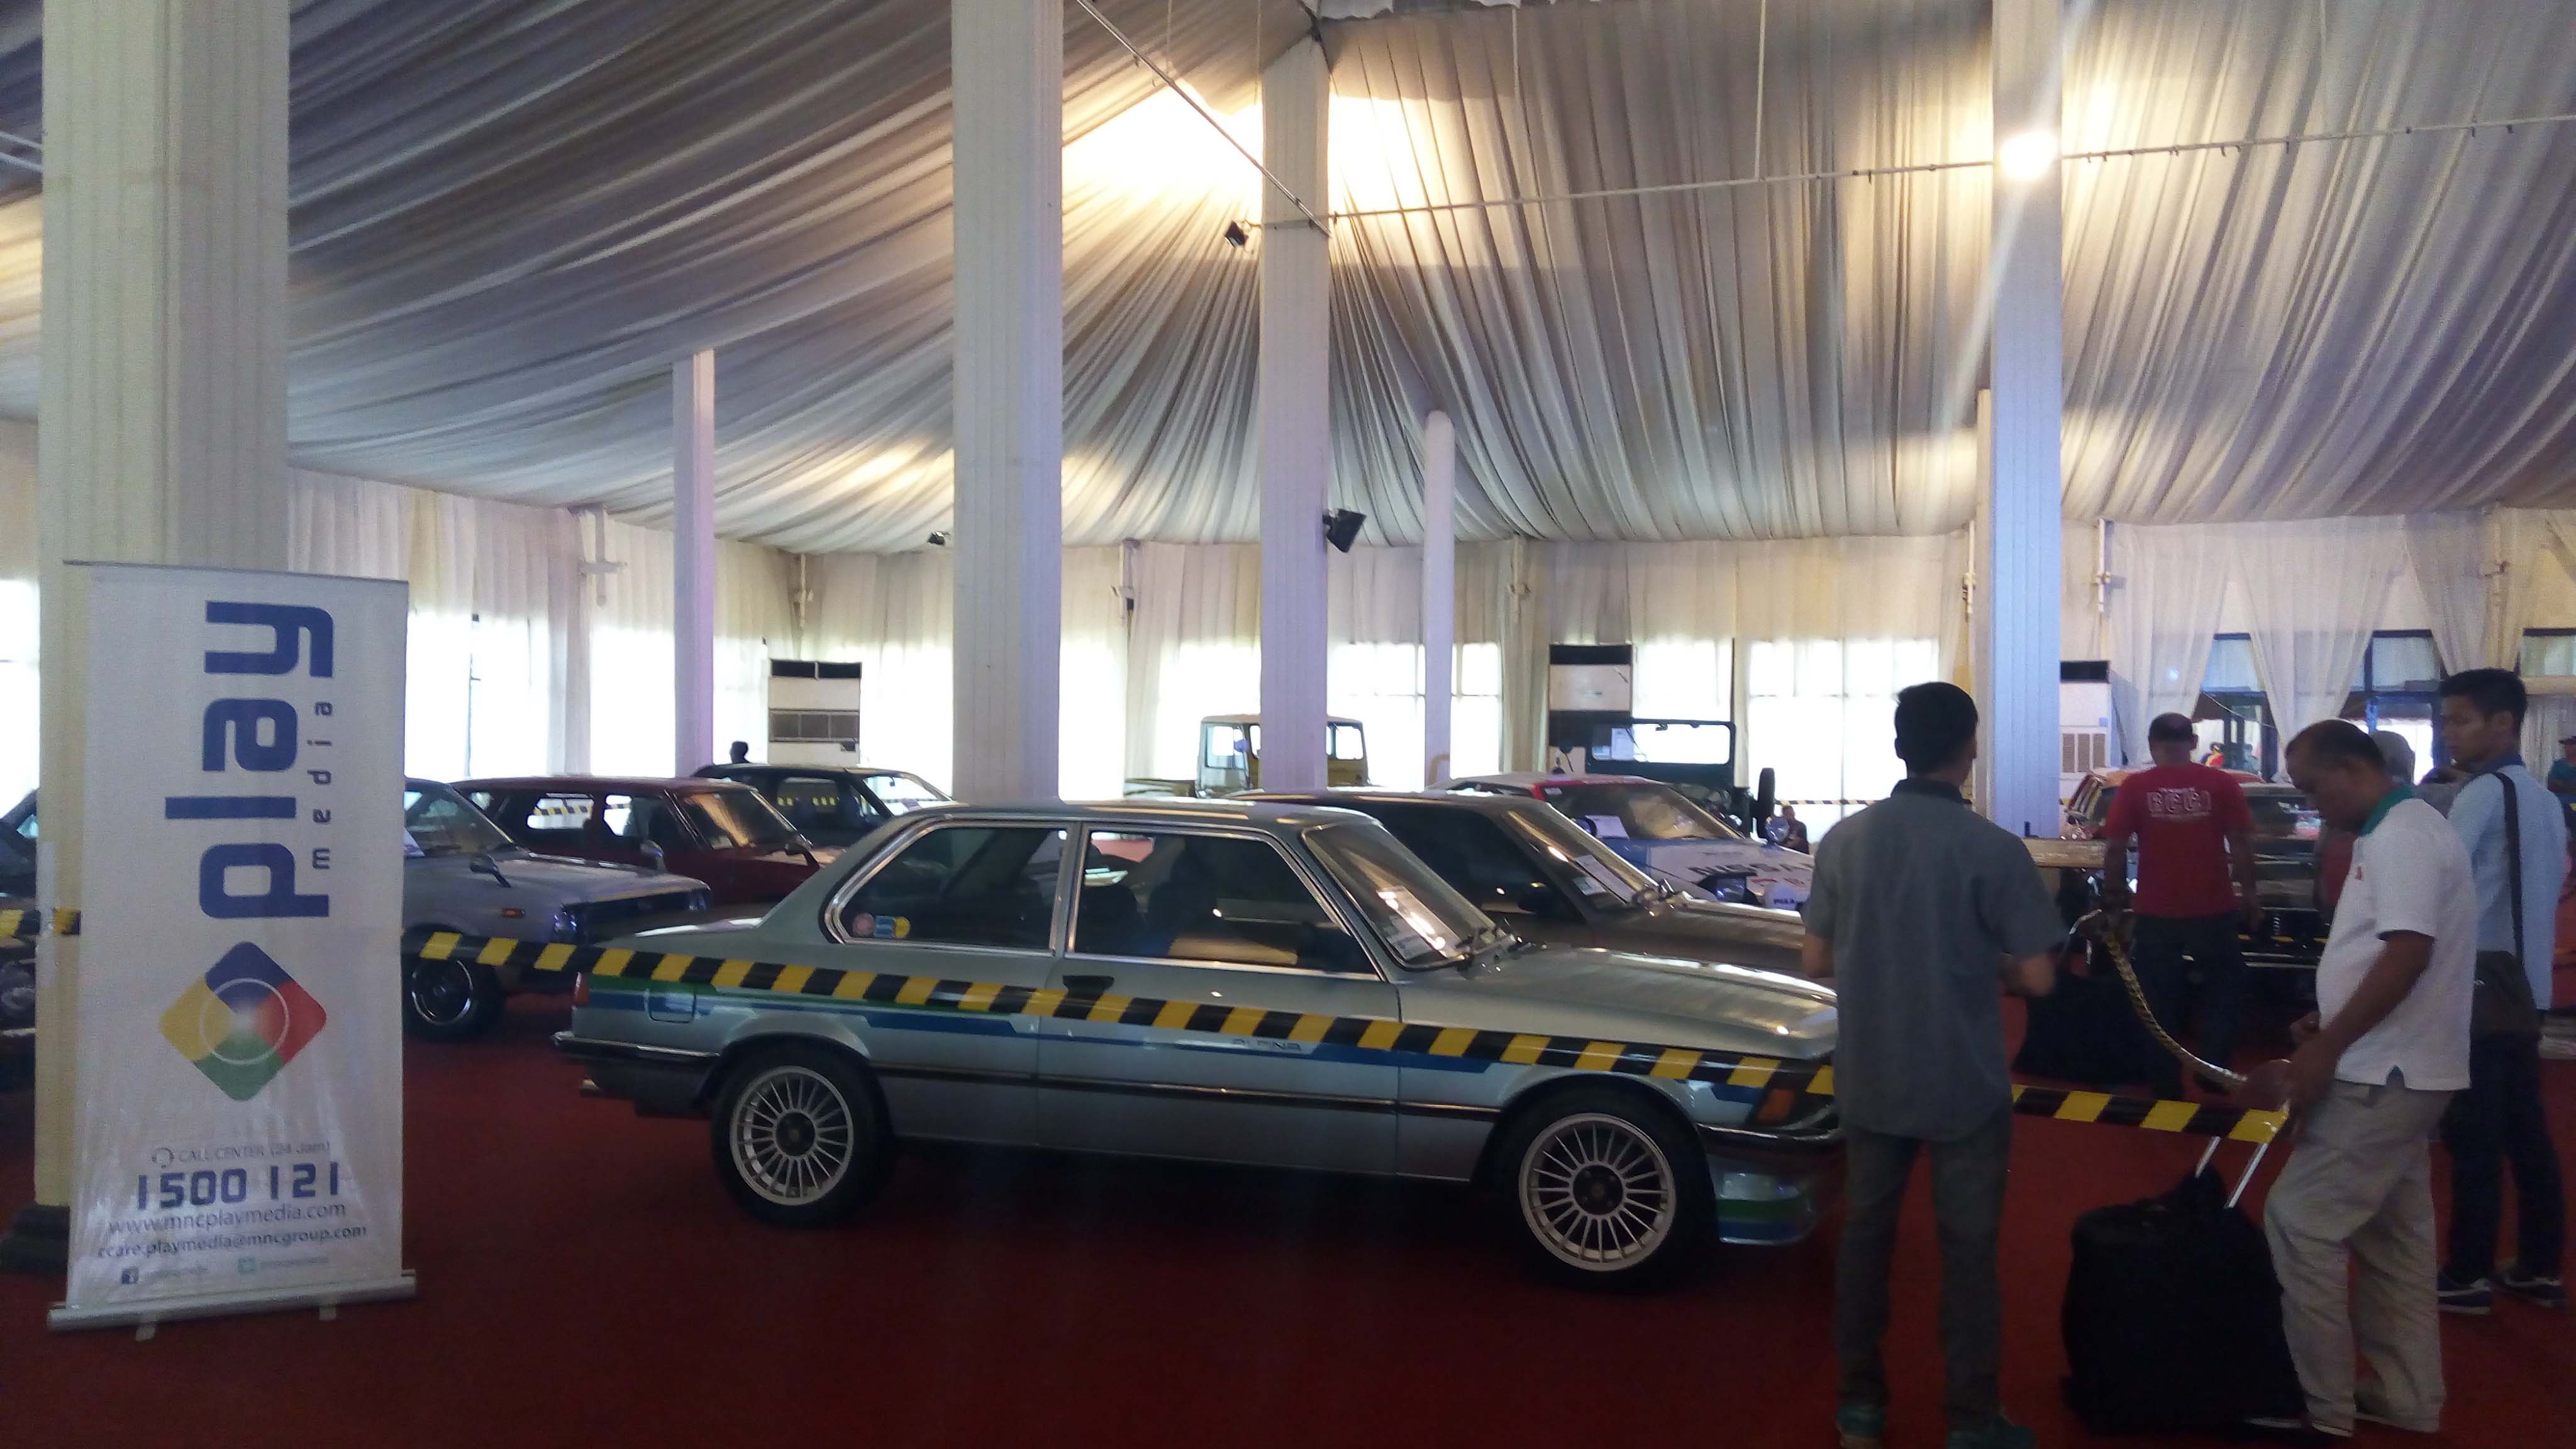 Manjakan Komunitas Penggemar Mobil Retro, Retro Car Semarang Gelar Indonesia Retro Classic Car Day 2017